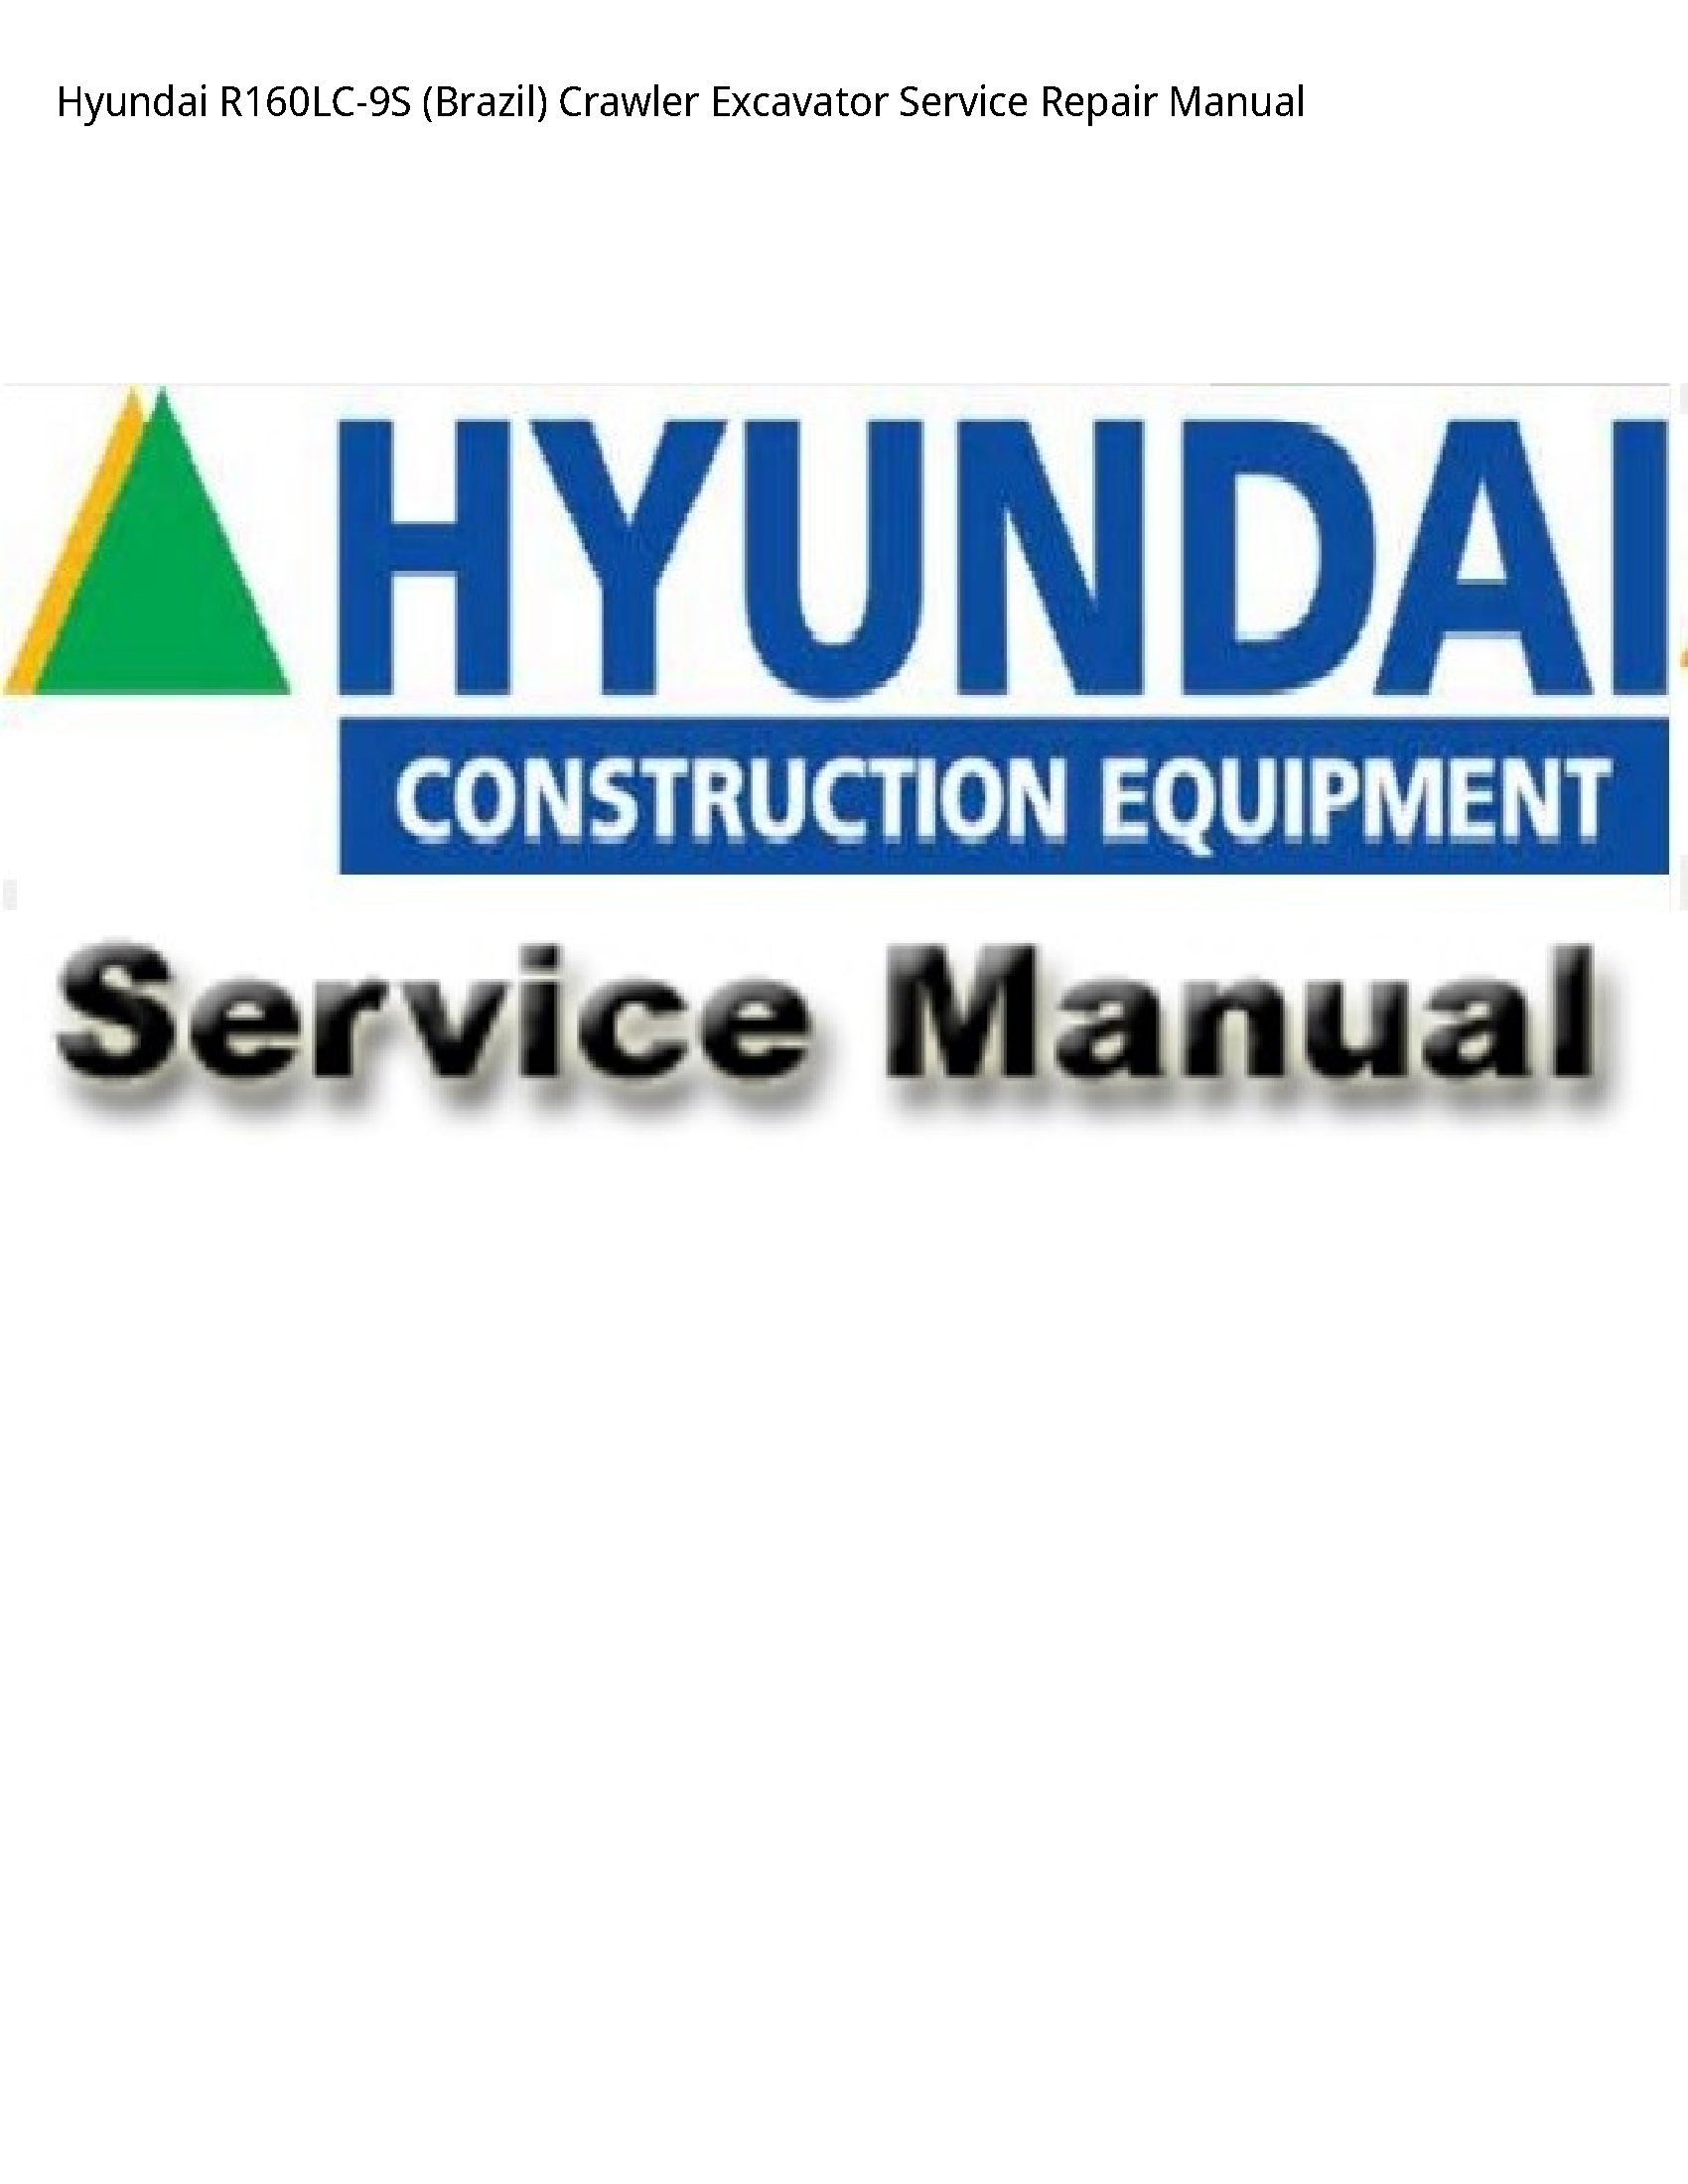 Hyundai R160LC-9S (Brazil) Crawler Excavator manual